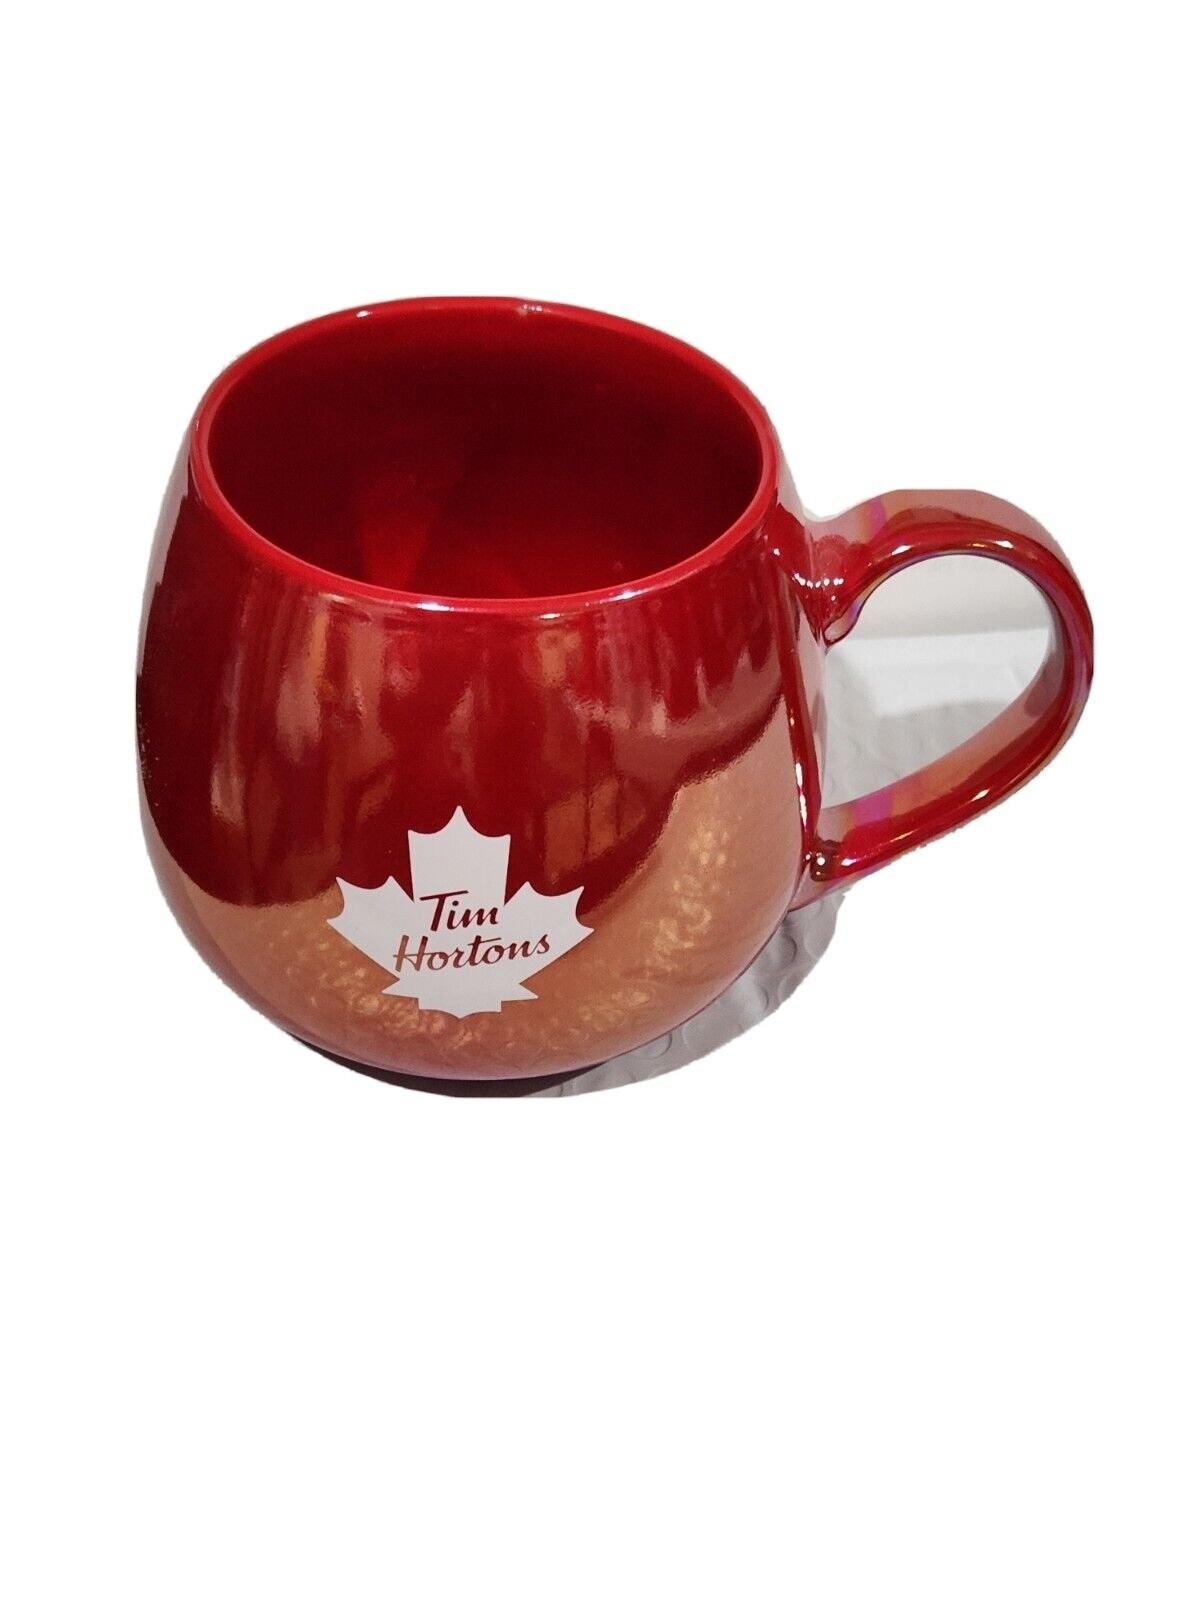 Tim Hortons 2020 Iridescent Red Coffee Tea Mug 12 Oz Maple Leaf NEW